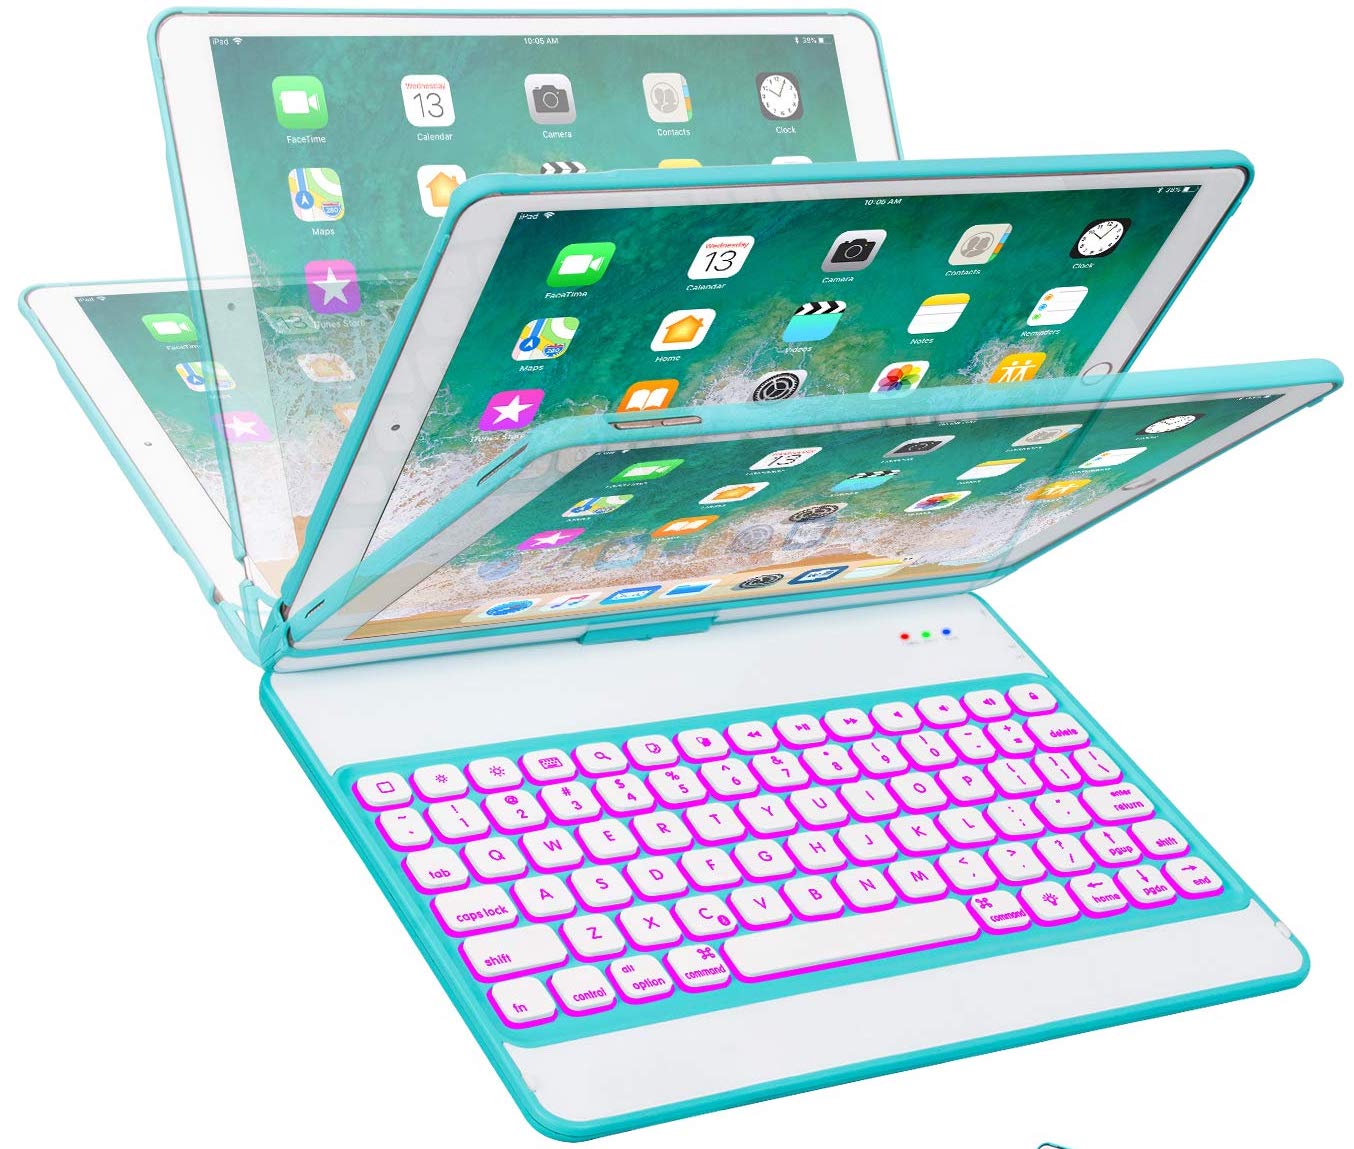 Earto keyboard case for iPad Pro